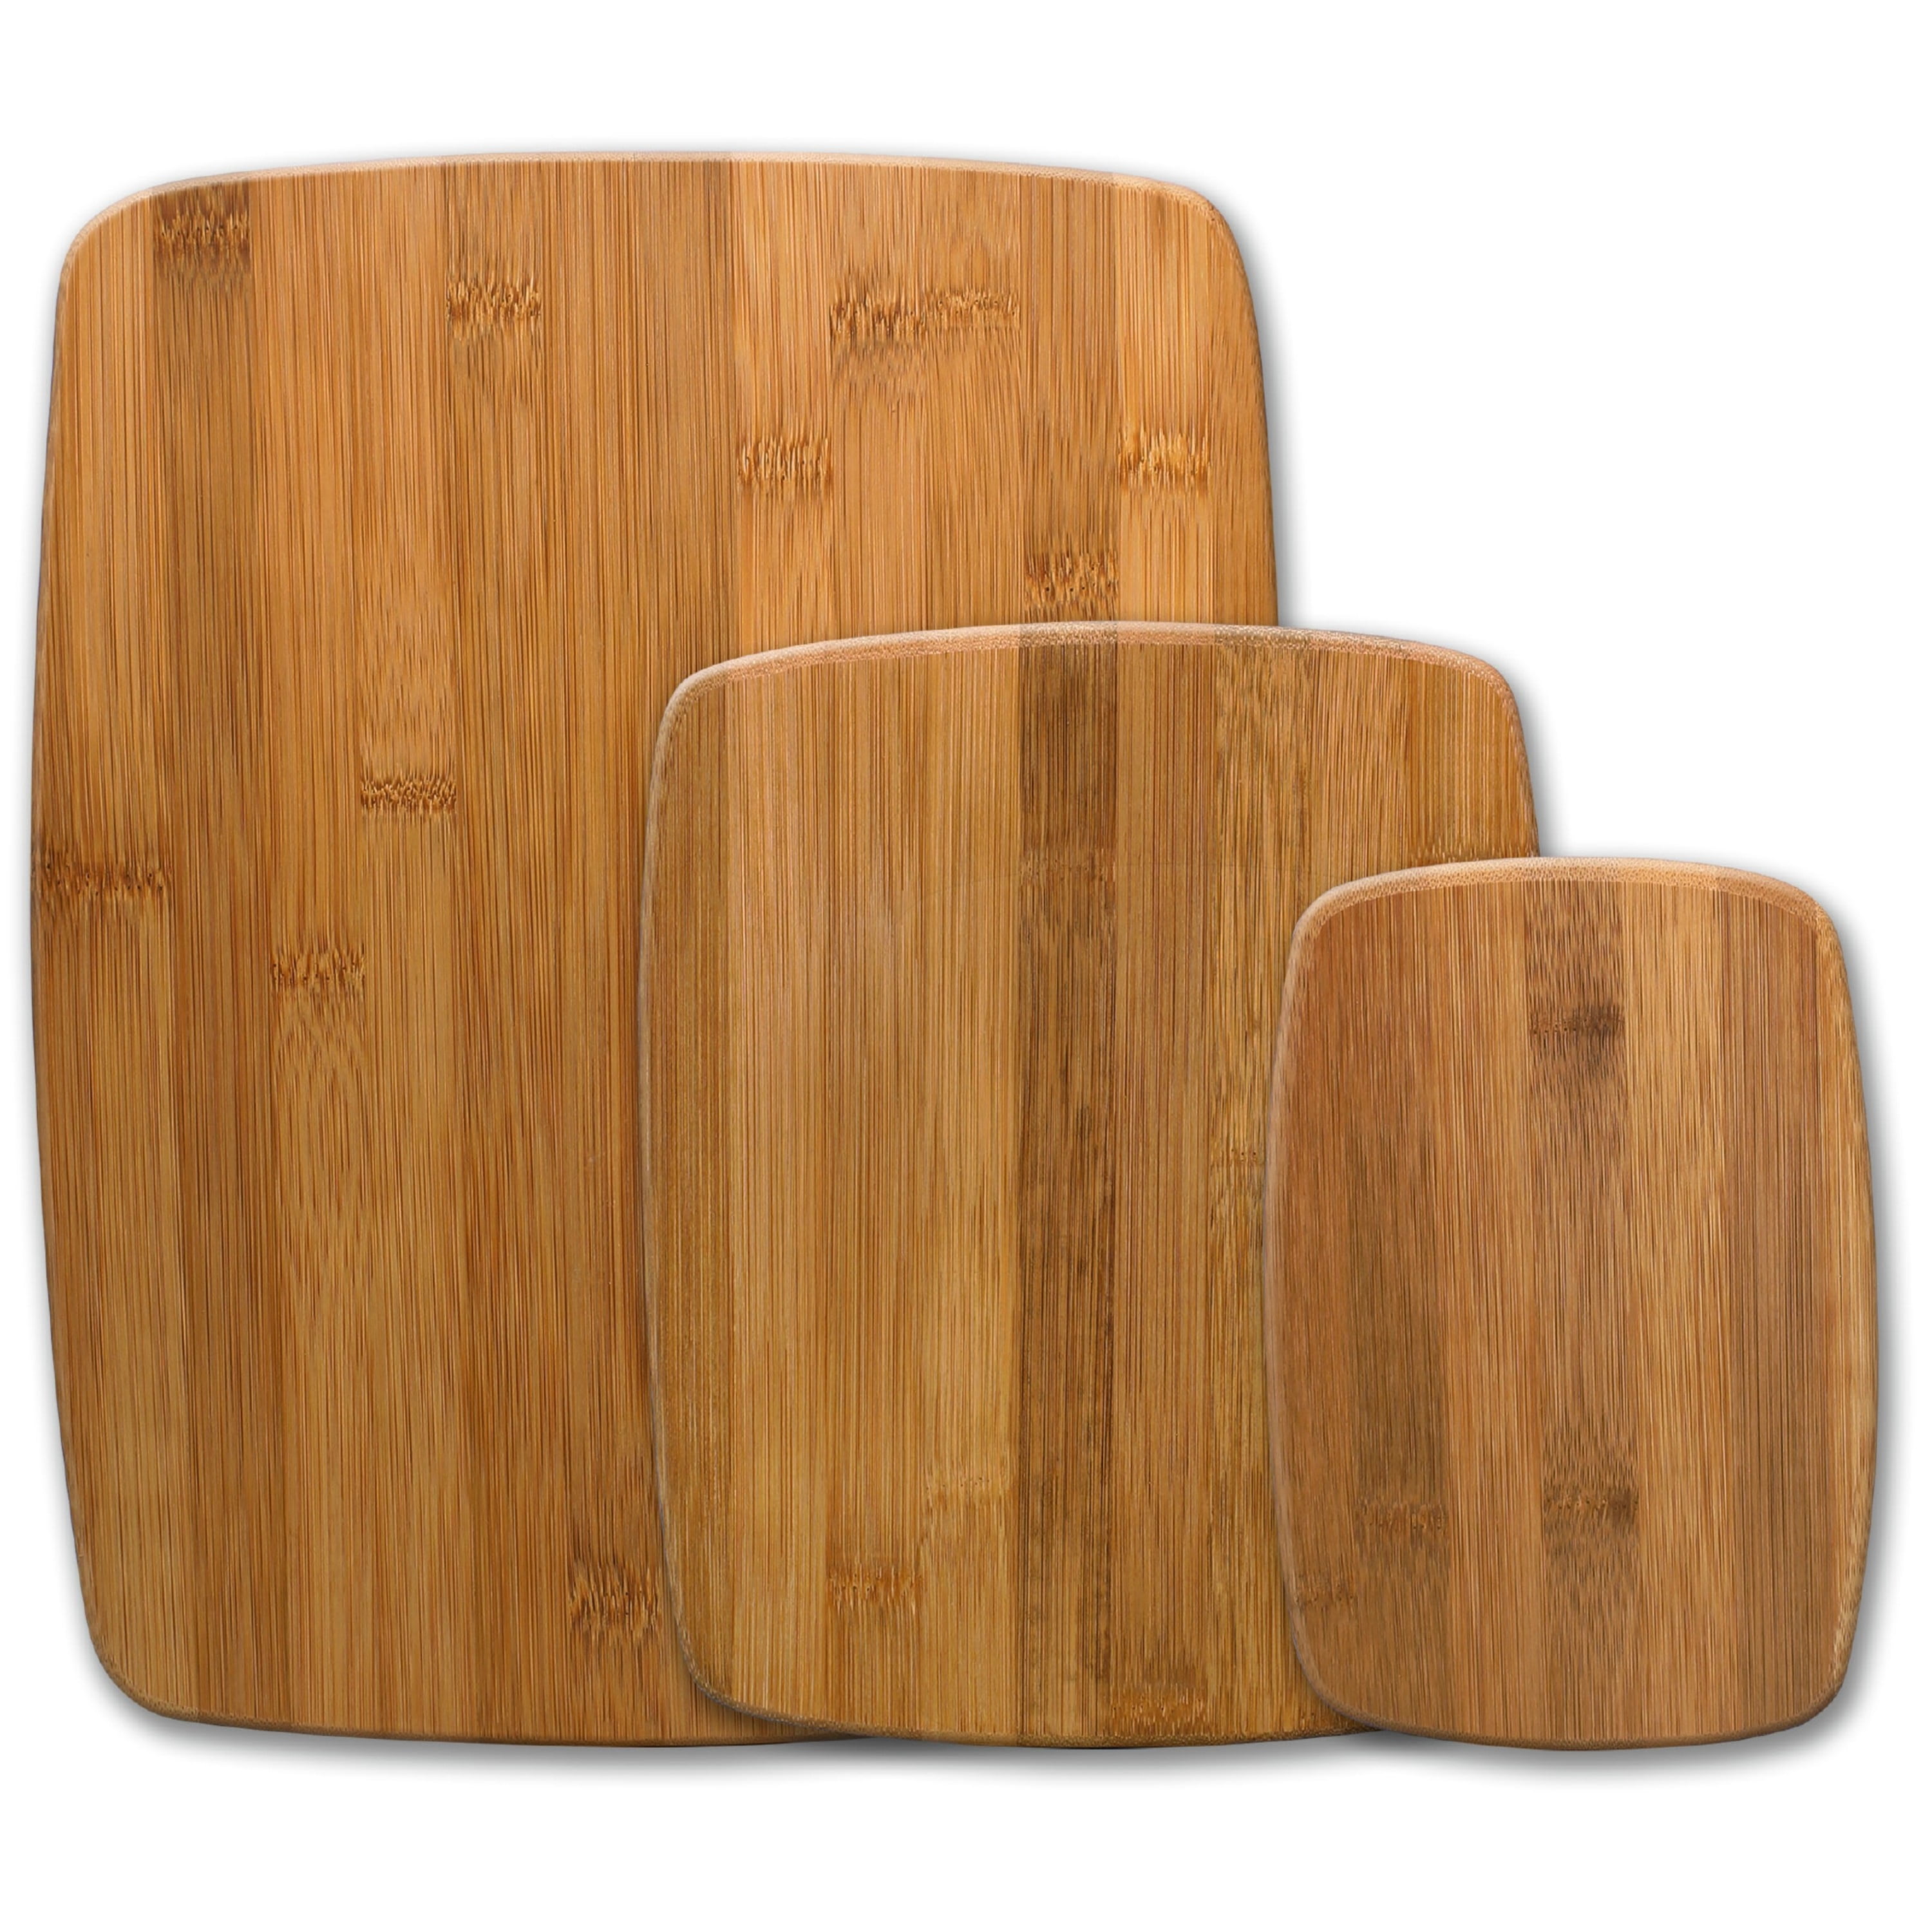 3-Piece Farberware Kitchen Bamboo Cutting Board Set (11x14", 8x10" & 8x5.5") $11.87 + F/S w/ Prime or $35+